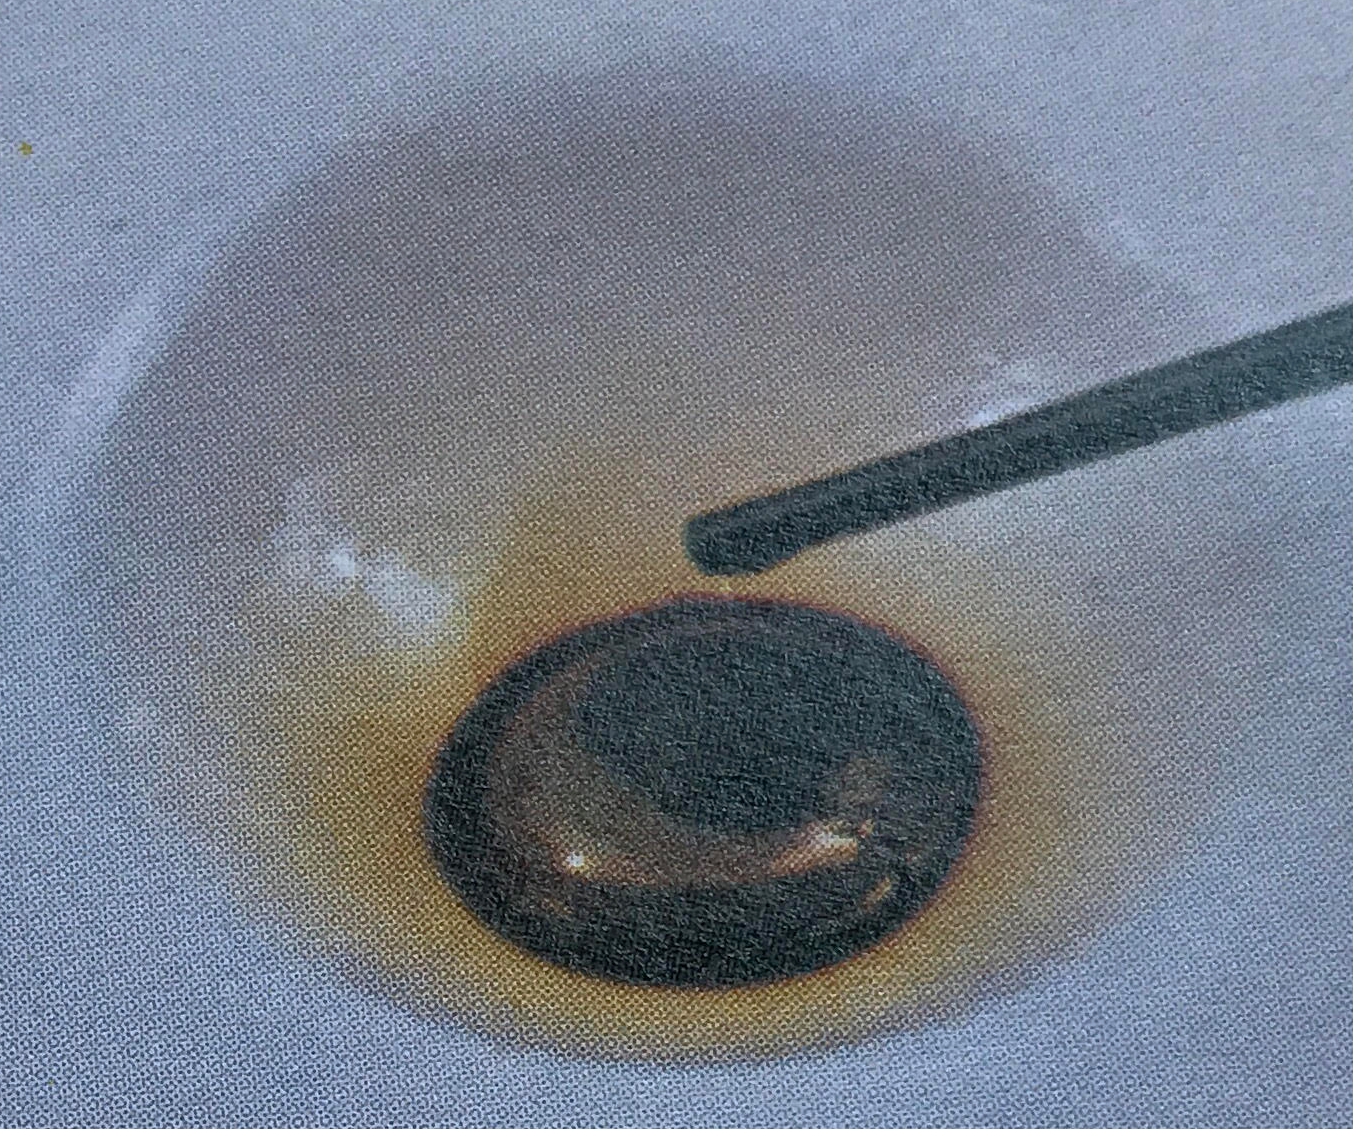 Metallic liquid rests on a pool of a deep brown liquid.